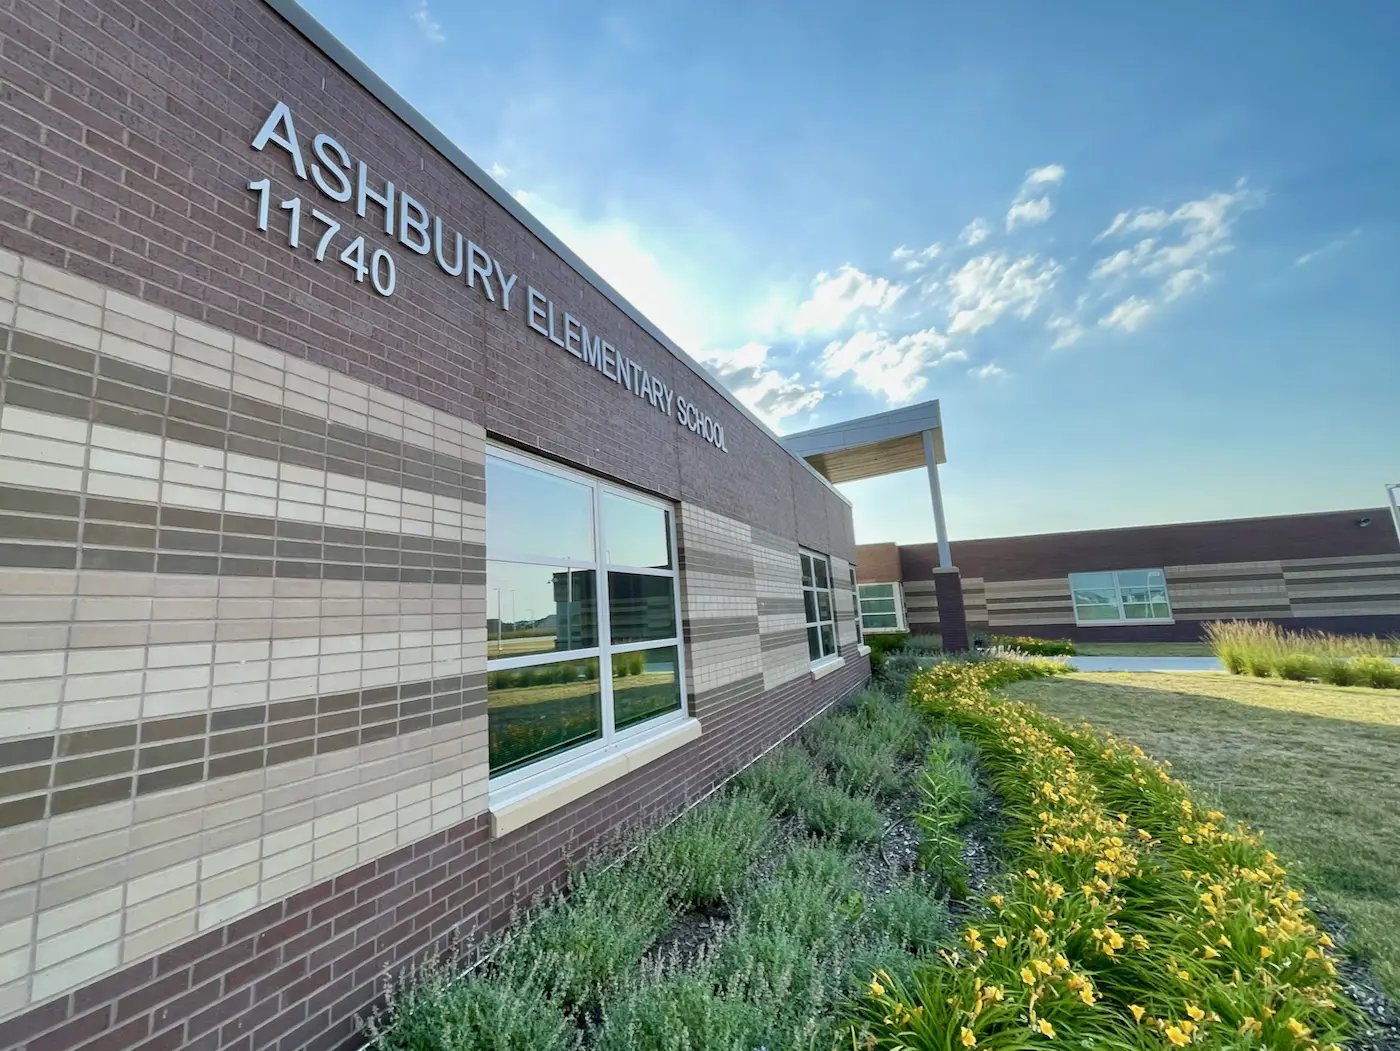 Ashbury Elementary School